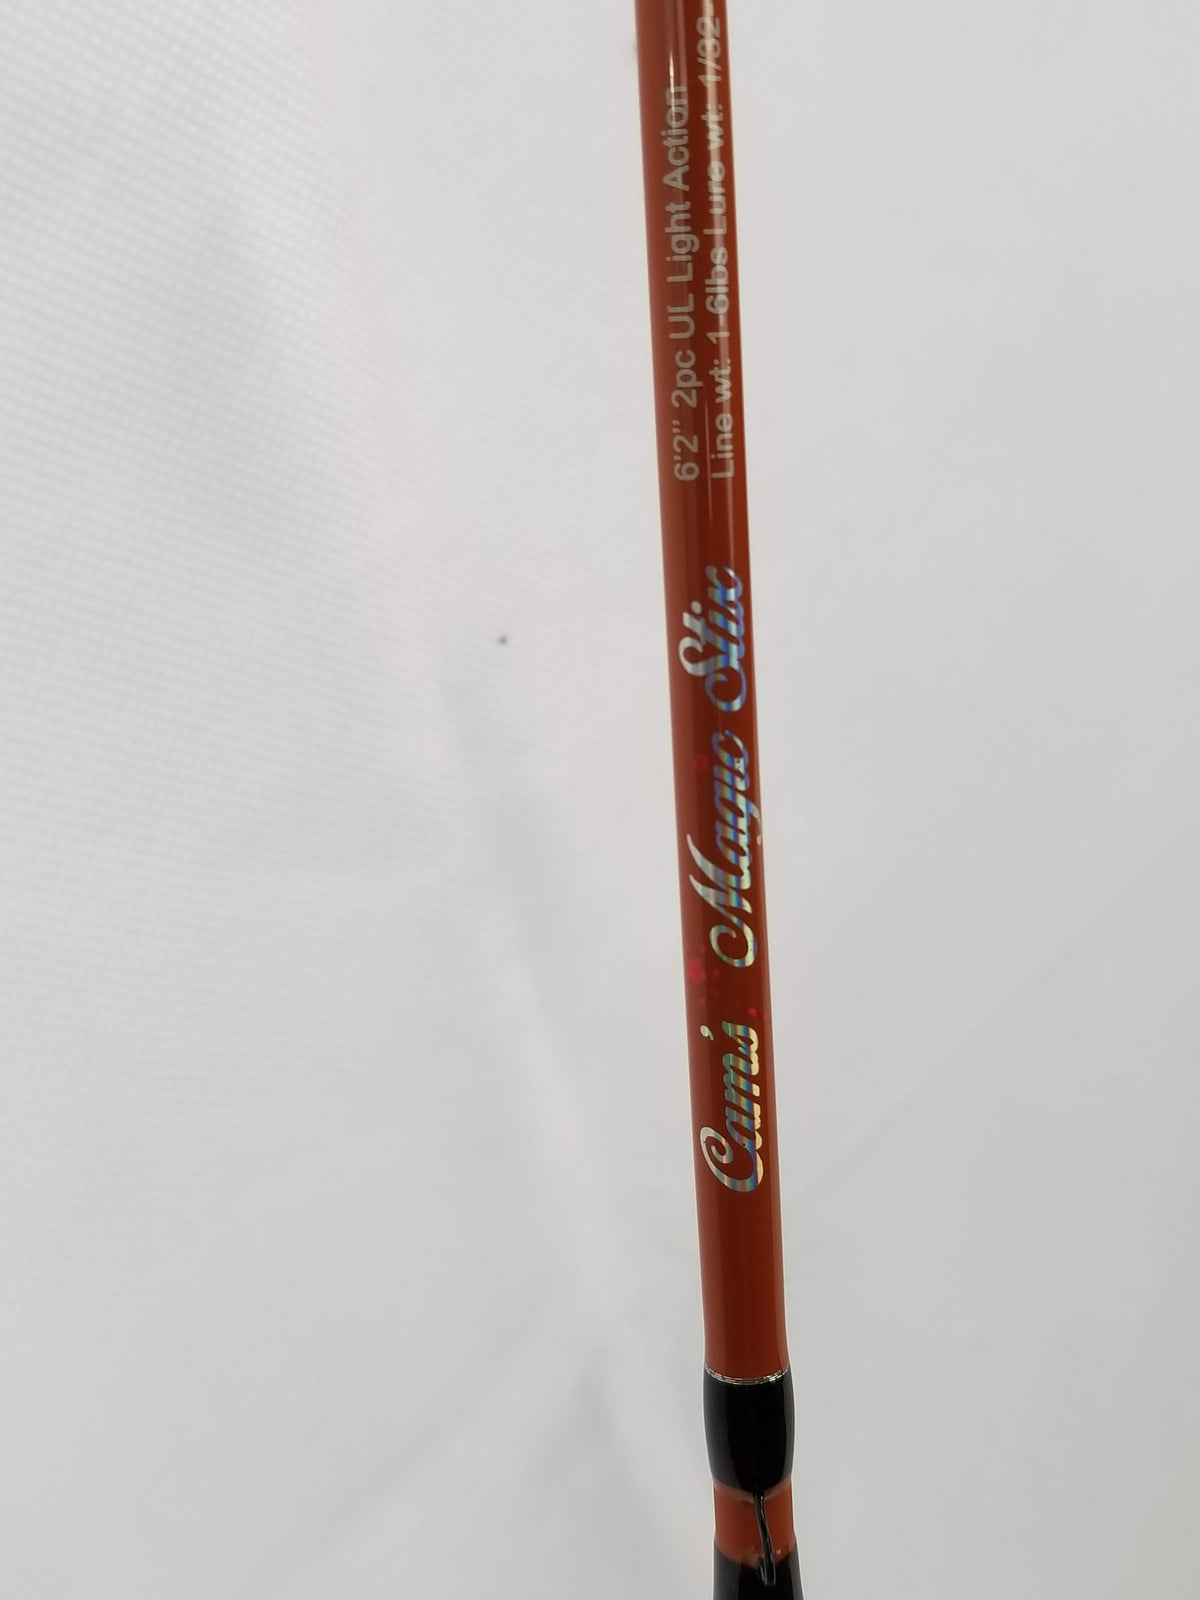 Cam's "Orange Poseidon"  6'0  Spinning rod and reel Combo